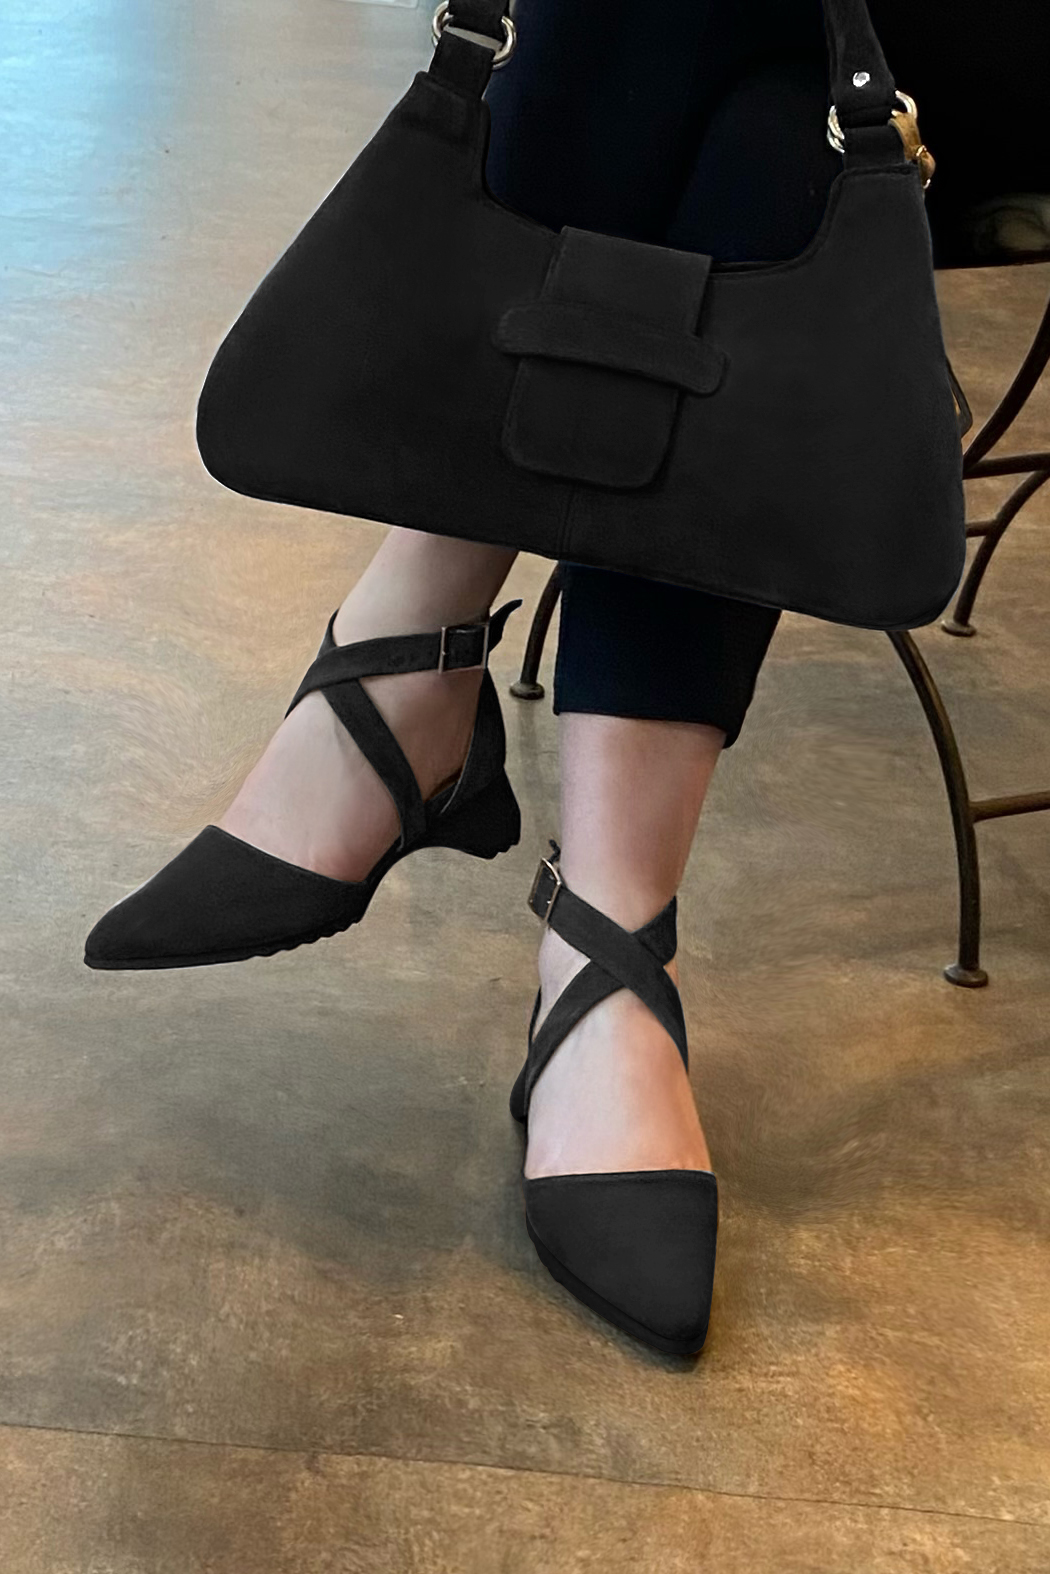 Matt black women's open side shoes, with crossed straps.. Worn view - Florence KOOIJMAN